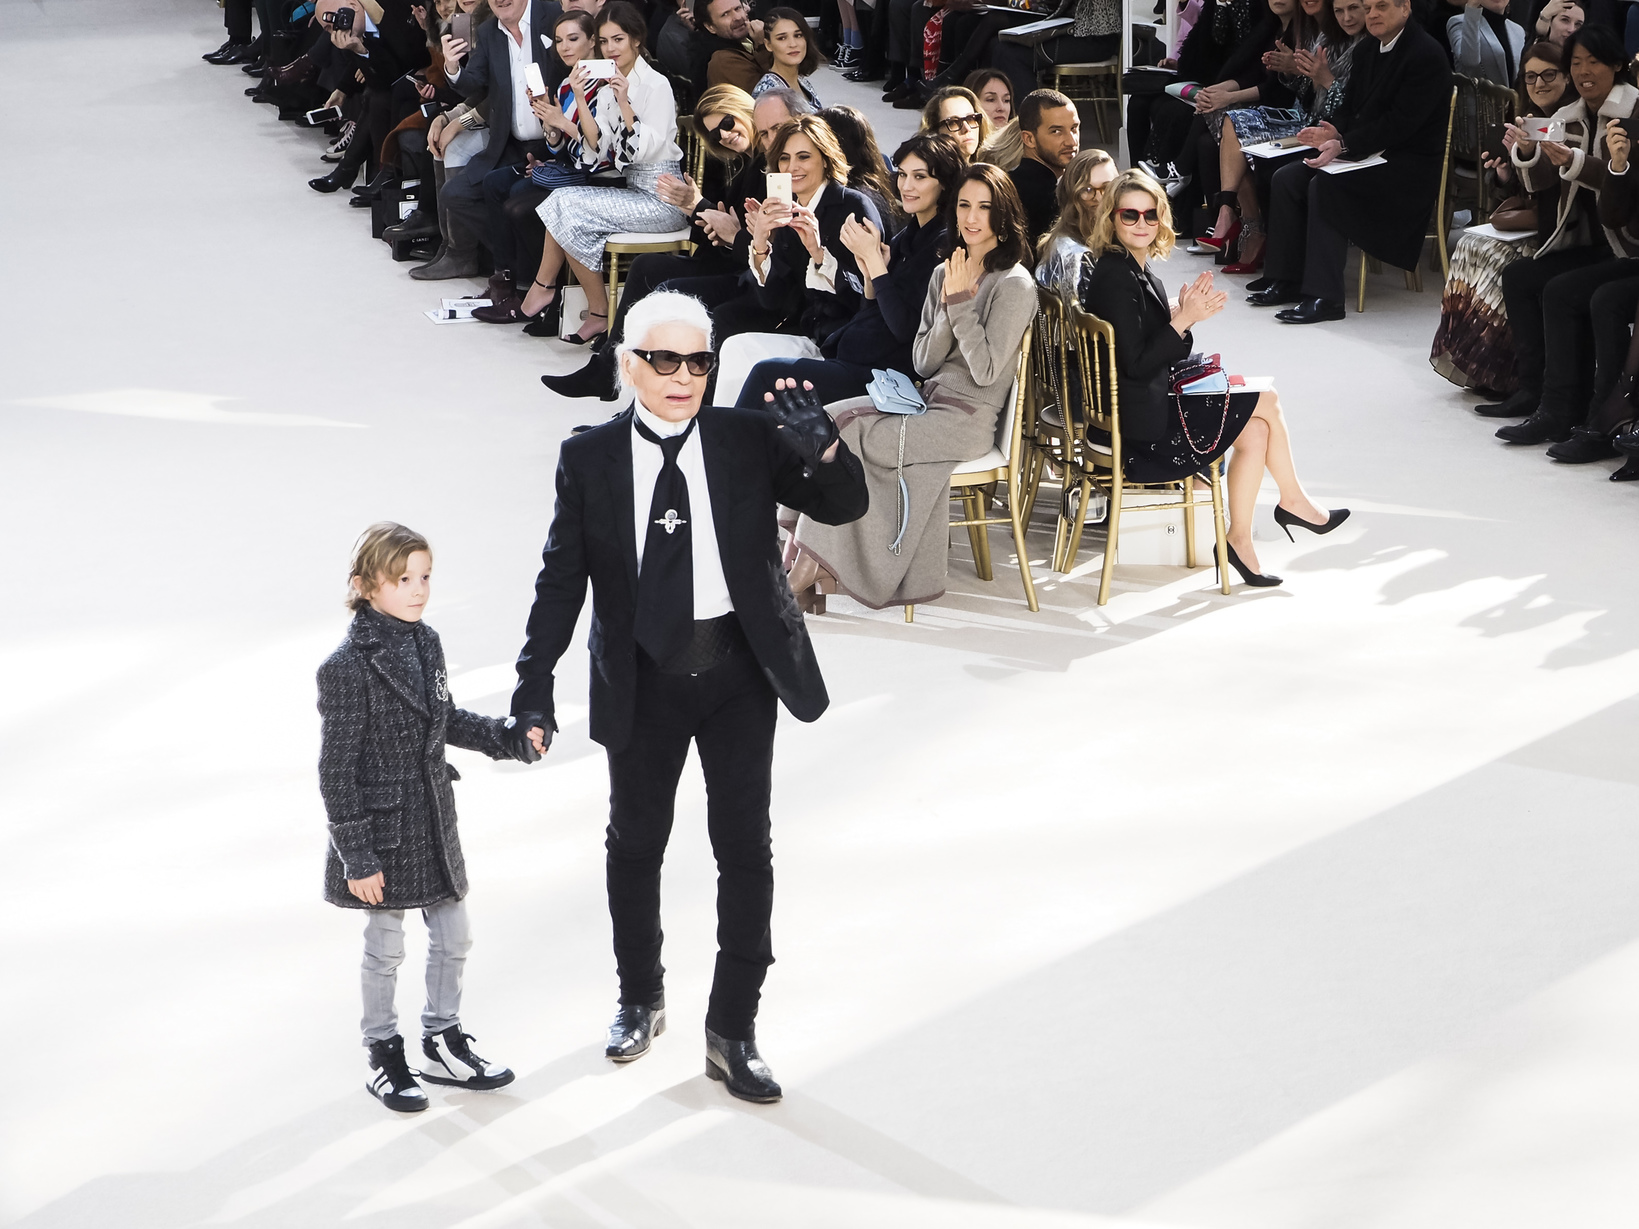 Karl Lagerfeld dead at 85: the Chanel designer revolutionized fashion - Vox